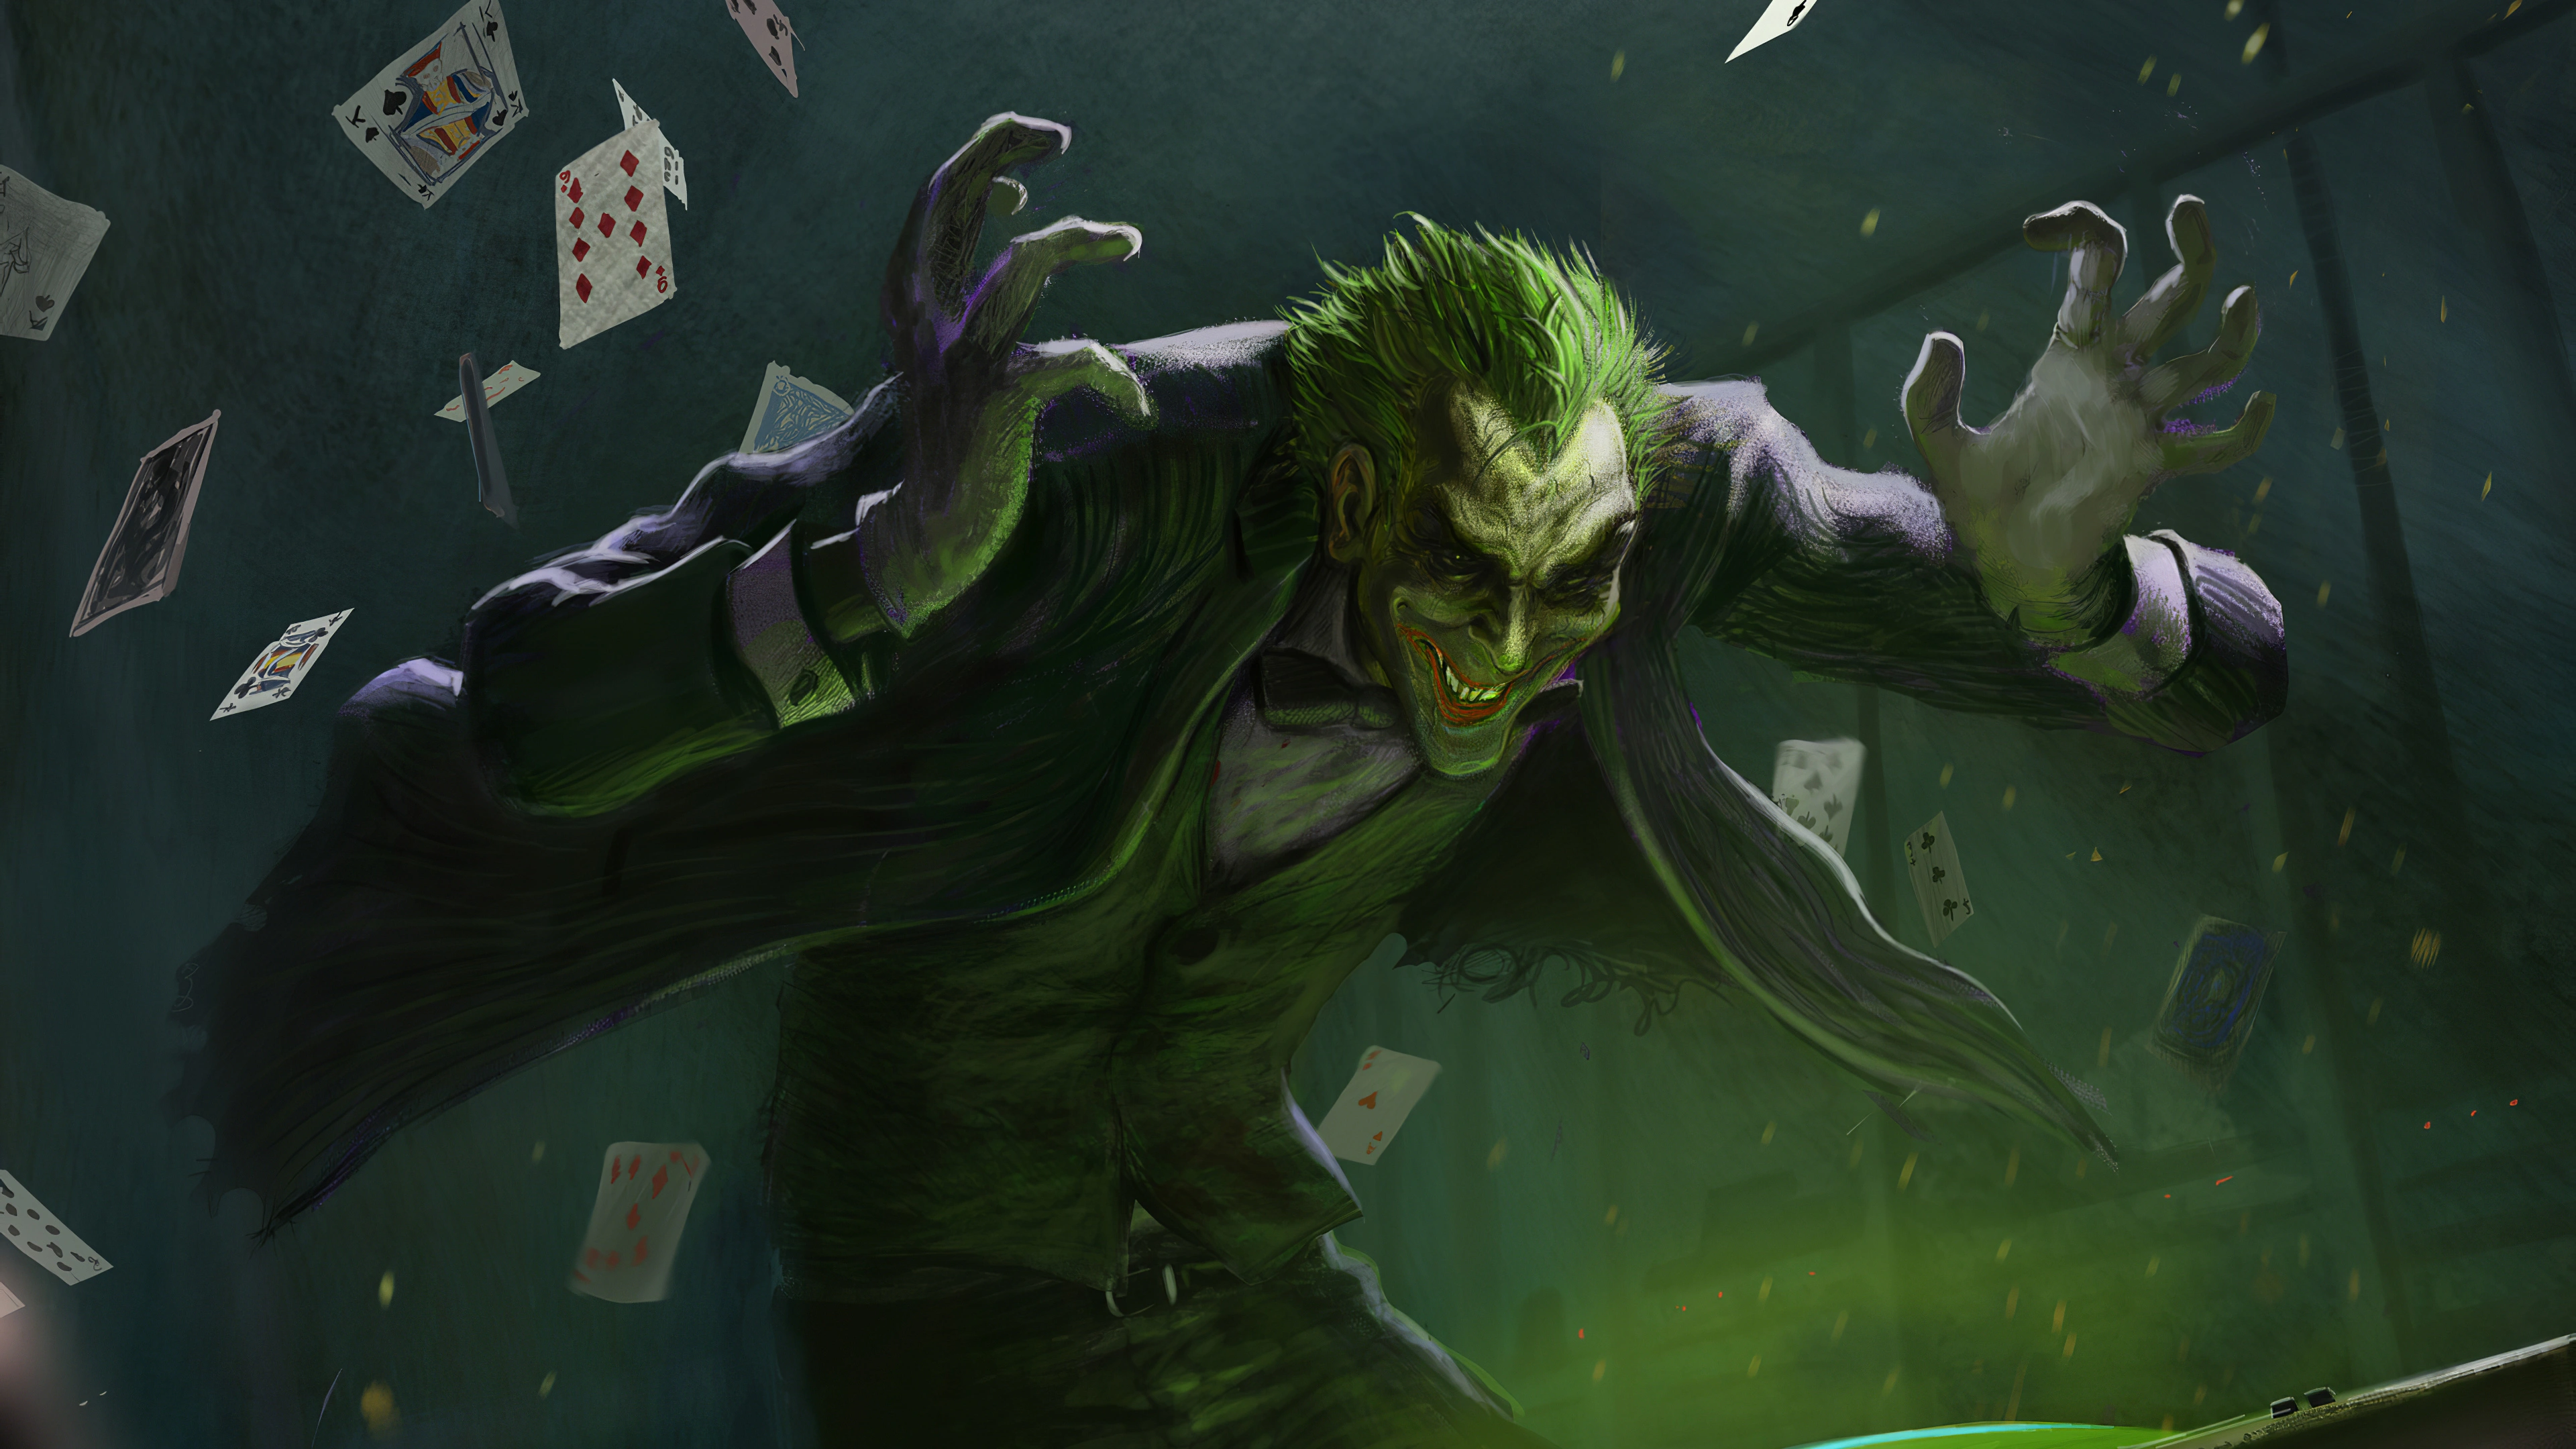 Wallpaper 4k Joker Green Theme Wallpaper